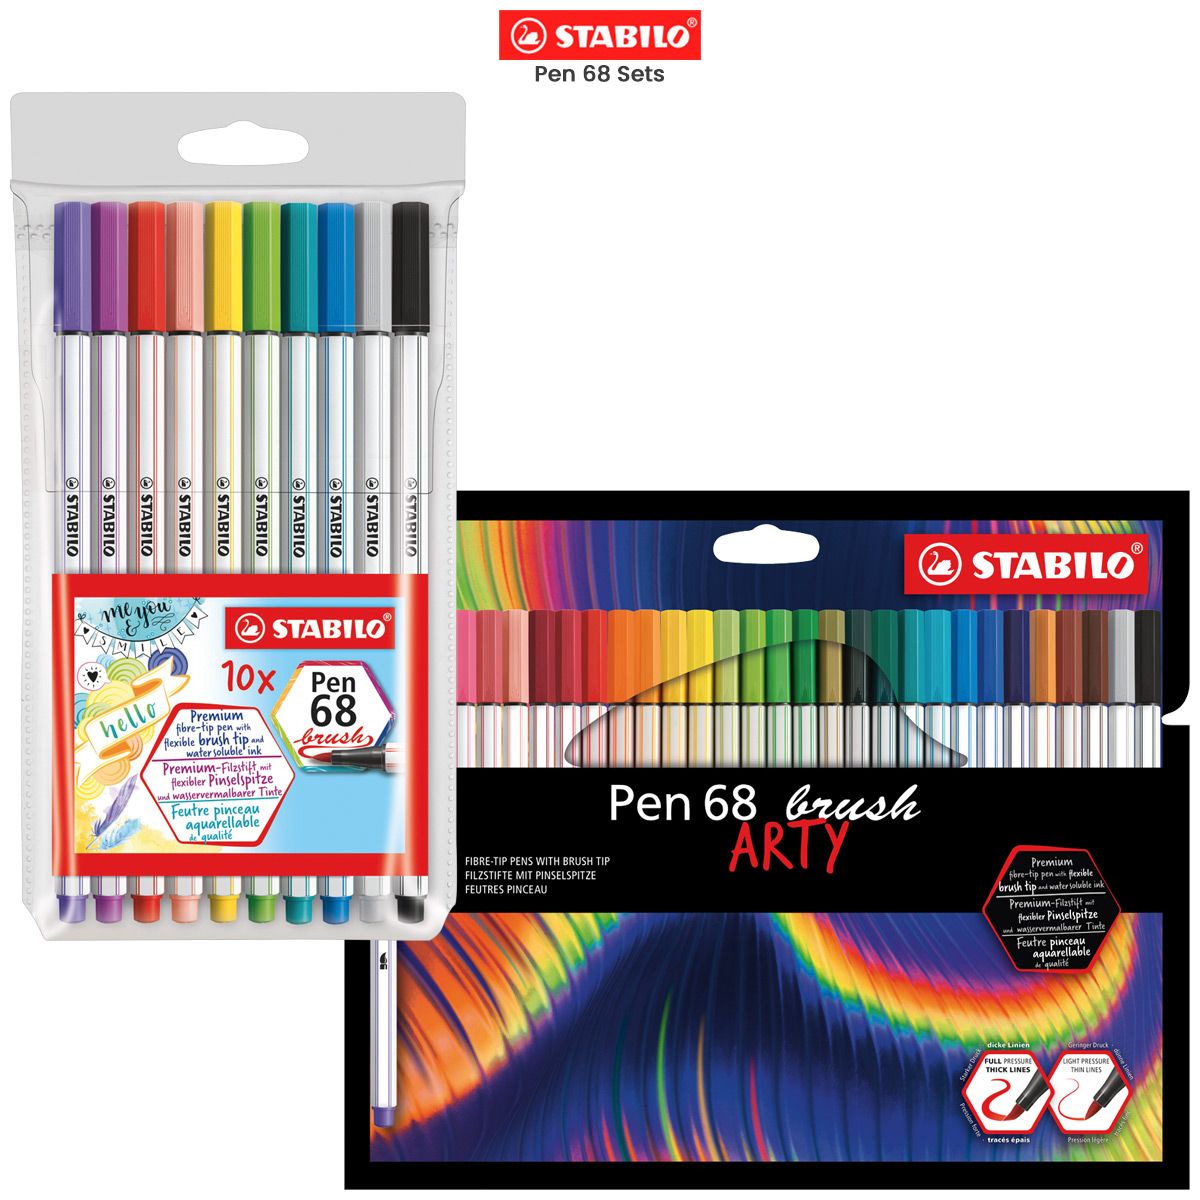 STABILO Premium Fibre-Tip Pen Pen 68 brush ARTY - Wallet of 30 - Assorted  Colors